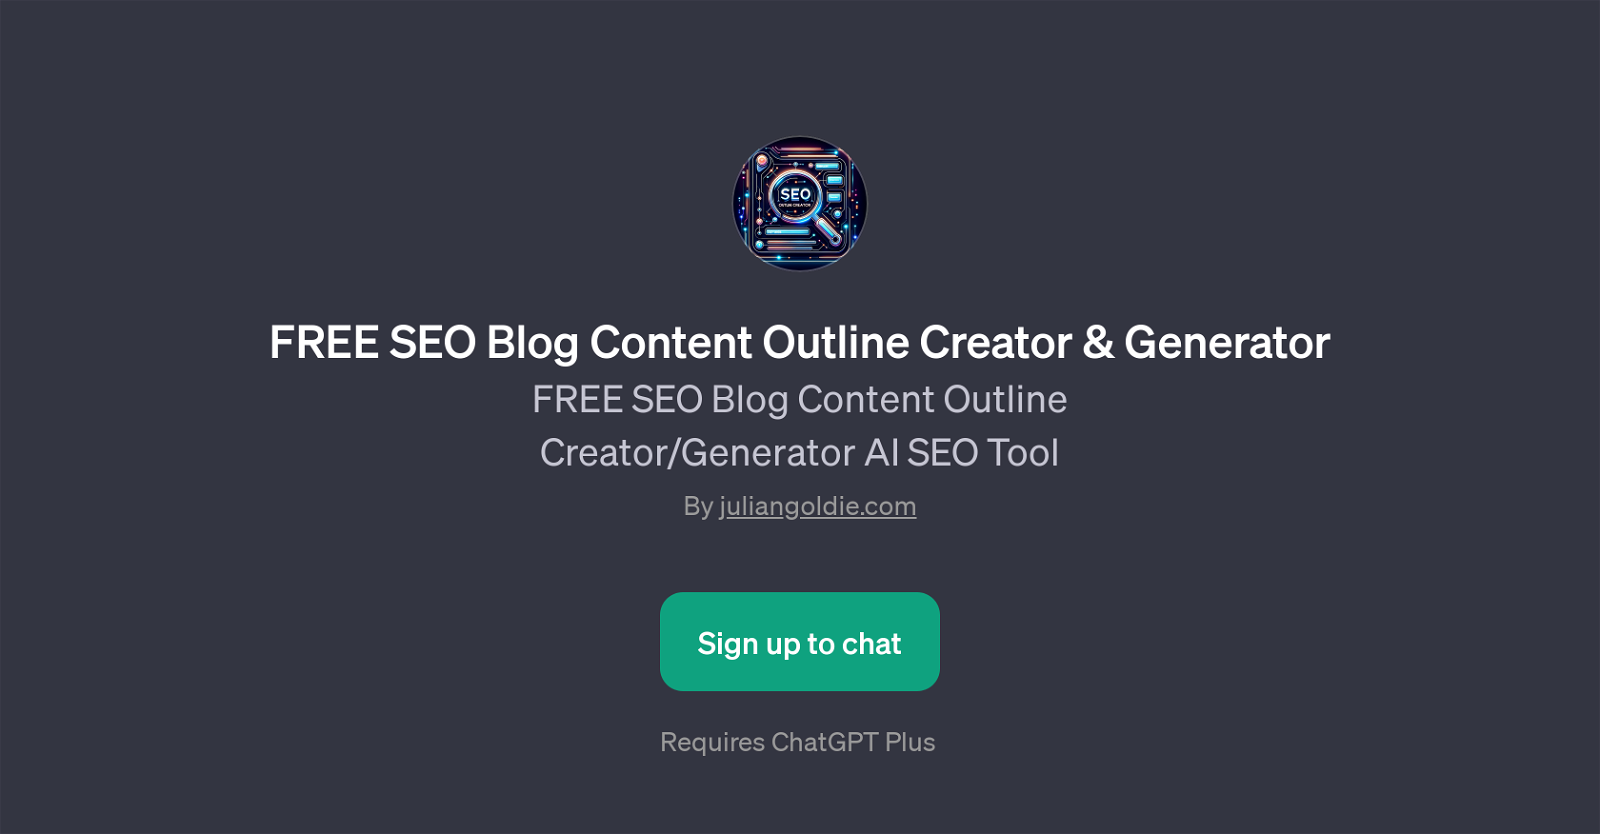 FREE SEO Blog Content Outline Creator & Generator website